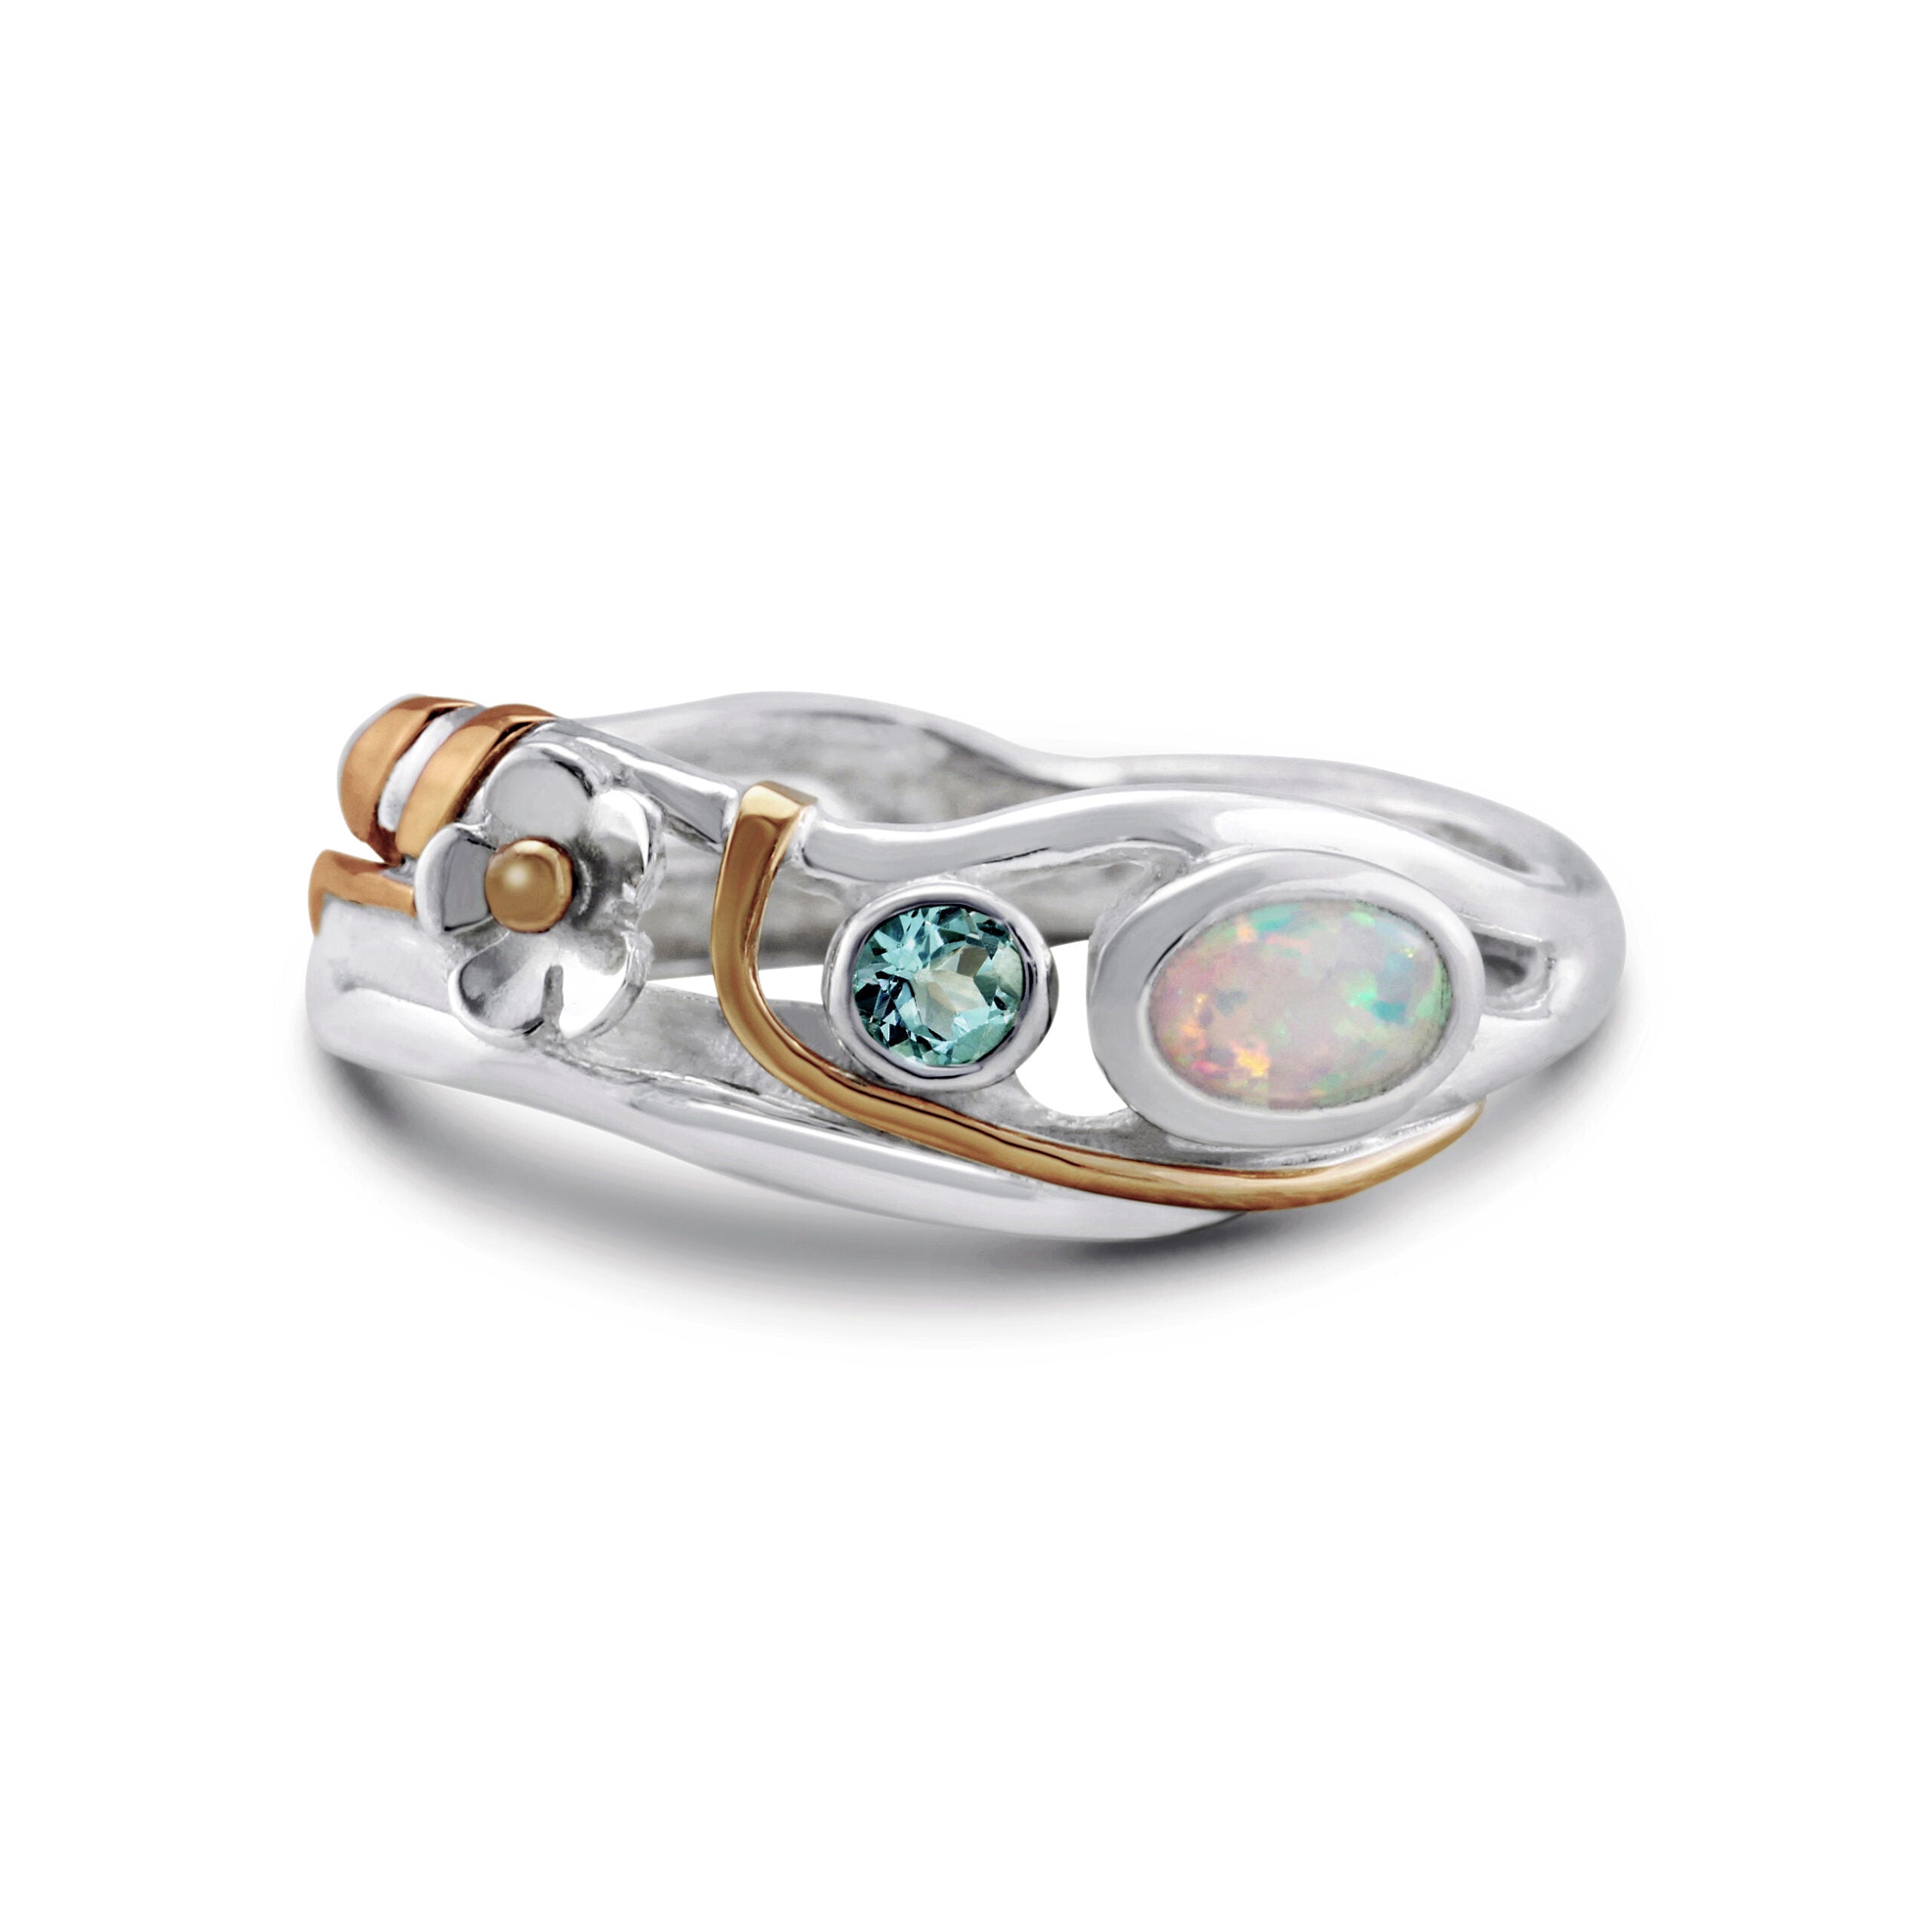 Opalite Topaz Flower Ring - The Nancy Smillie Shop - Art, Jewellery & Designer Gifts Glasgow